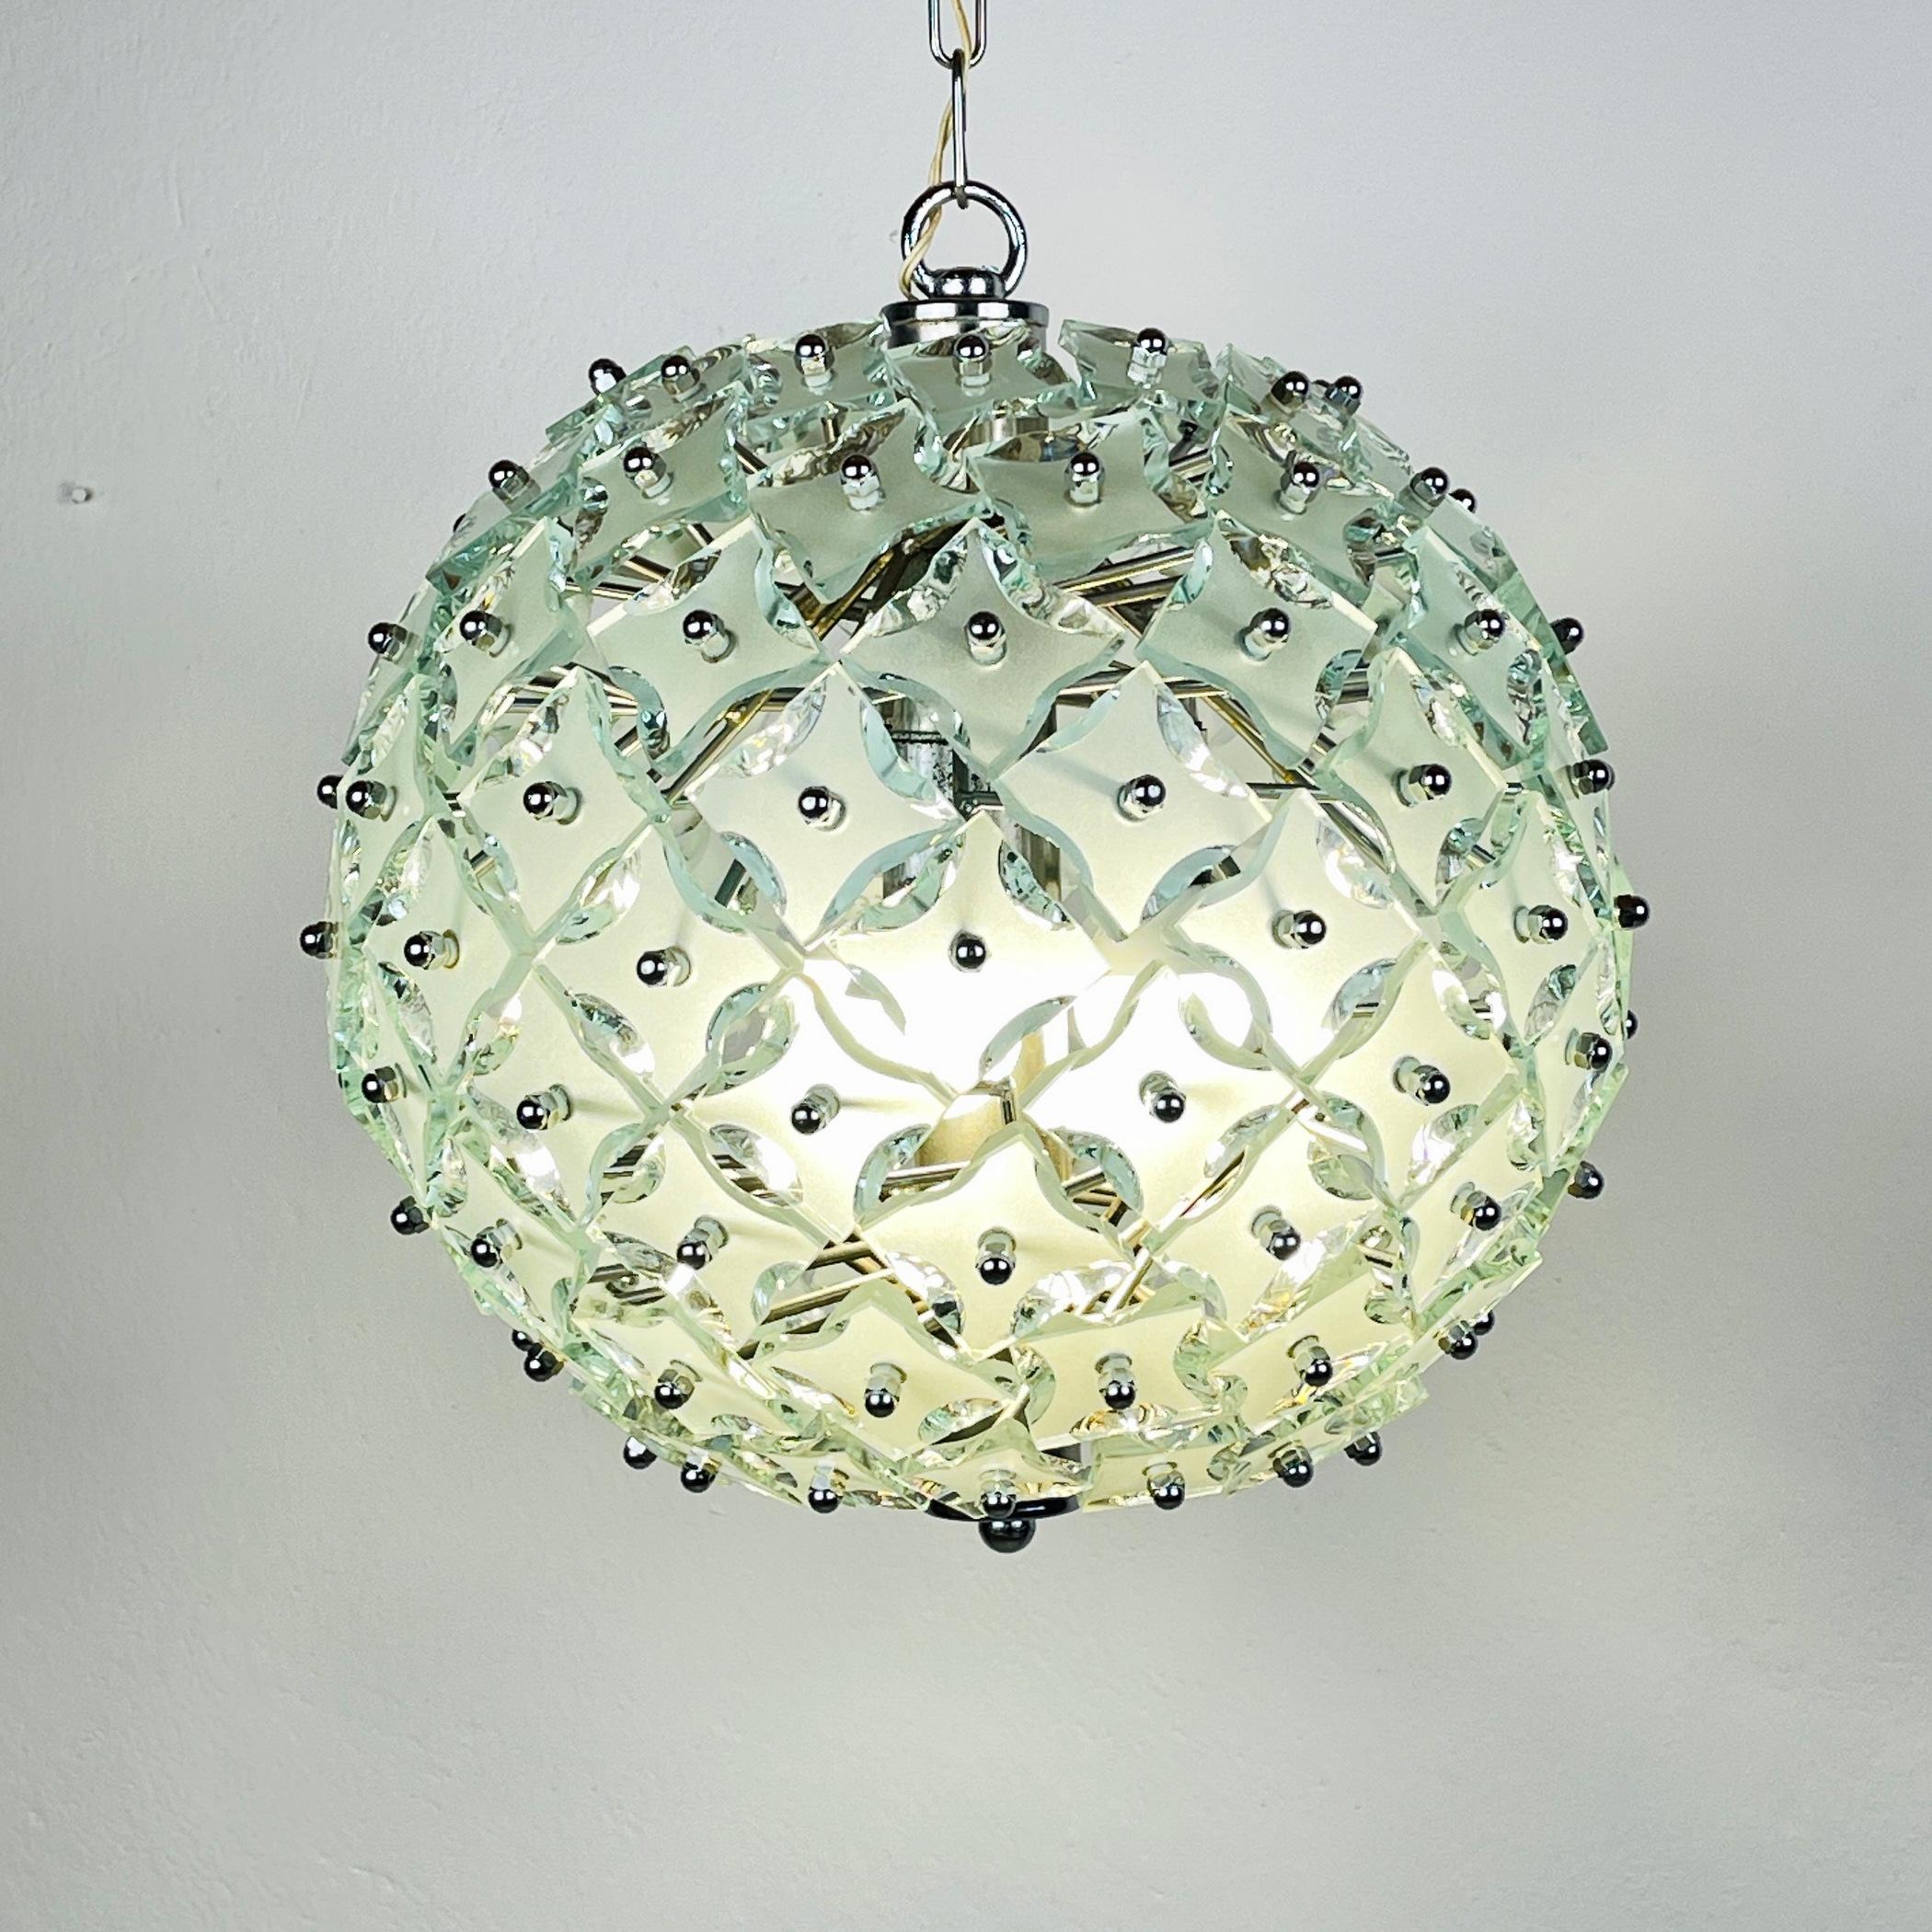 Art glass pendant lamp Sputnik by Fontana Arte Italy 1960s For Sale 6